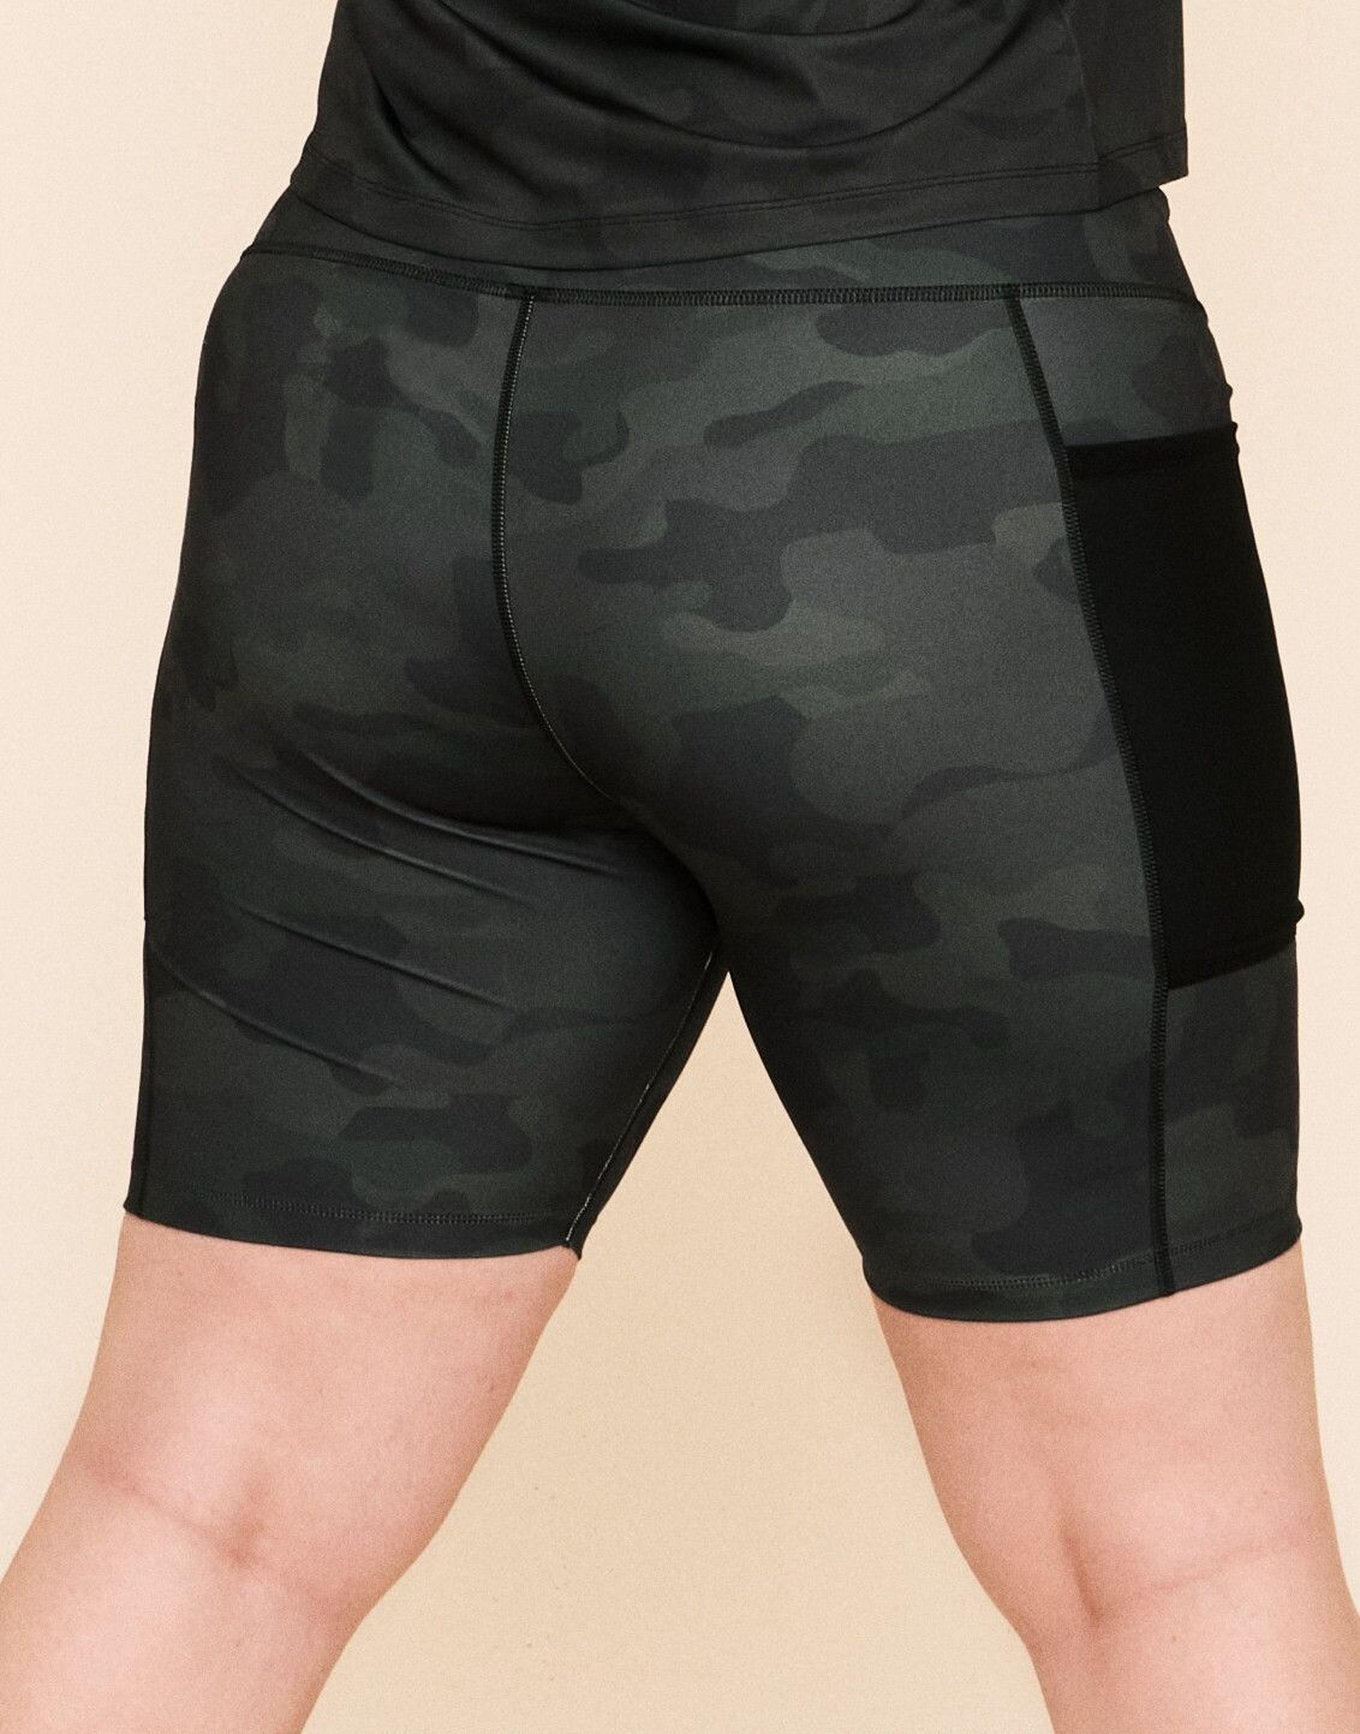 Earth Republic Anais High Waisted Short Biker Shorts in color Dark Camo and shape short